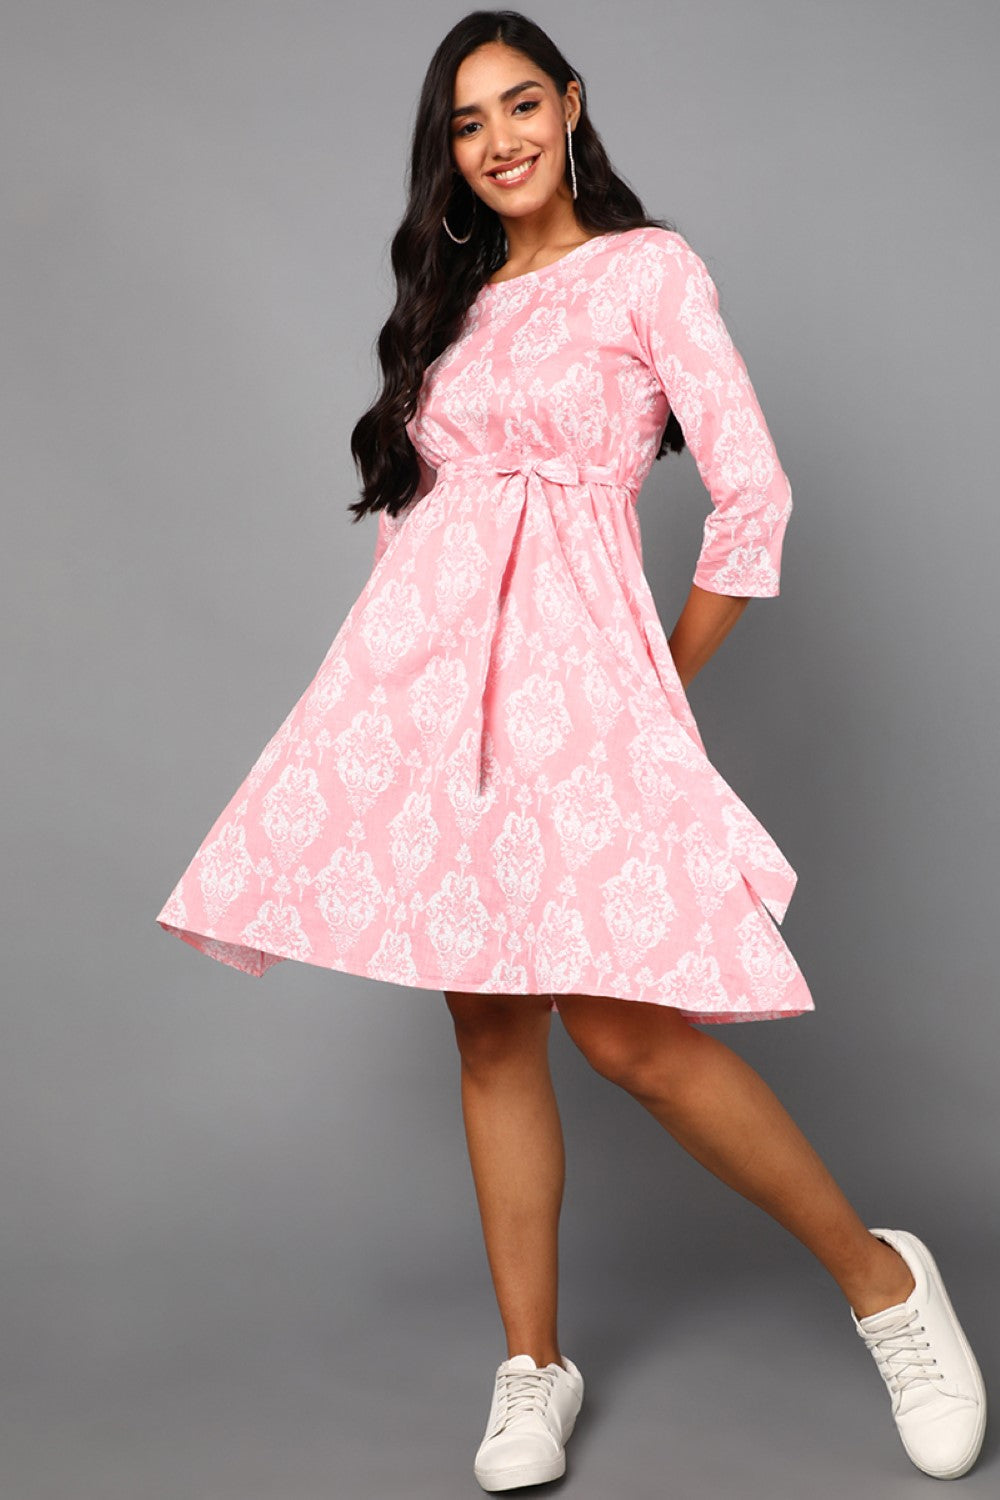 Women's Pink Cotton Ethnic Motifs Printed Dress  - Ahika